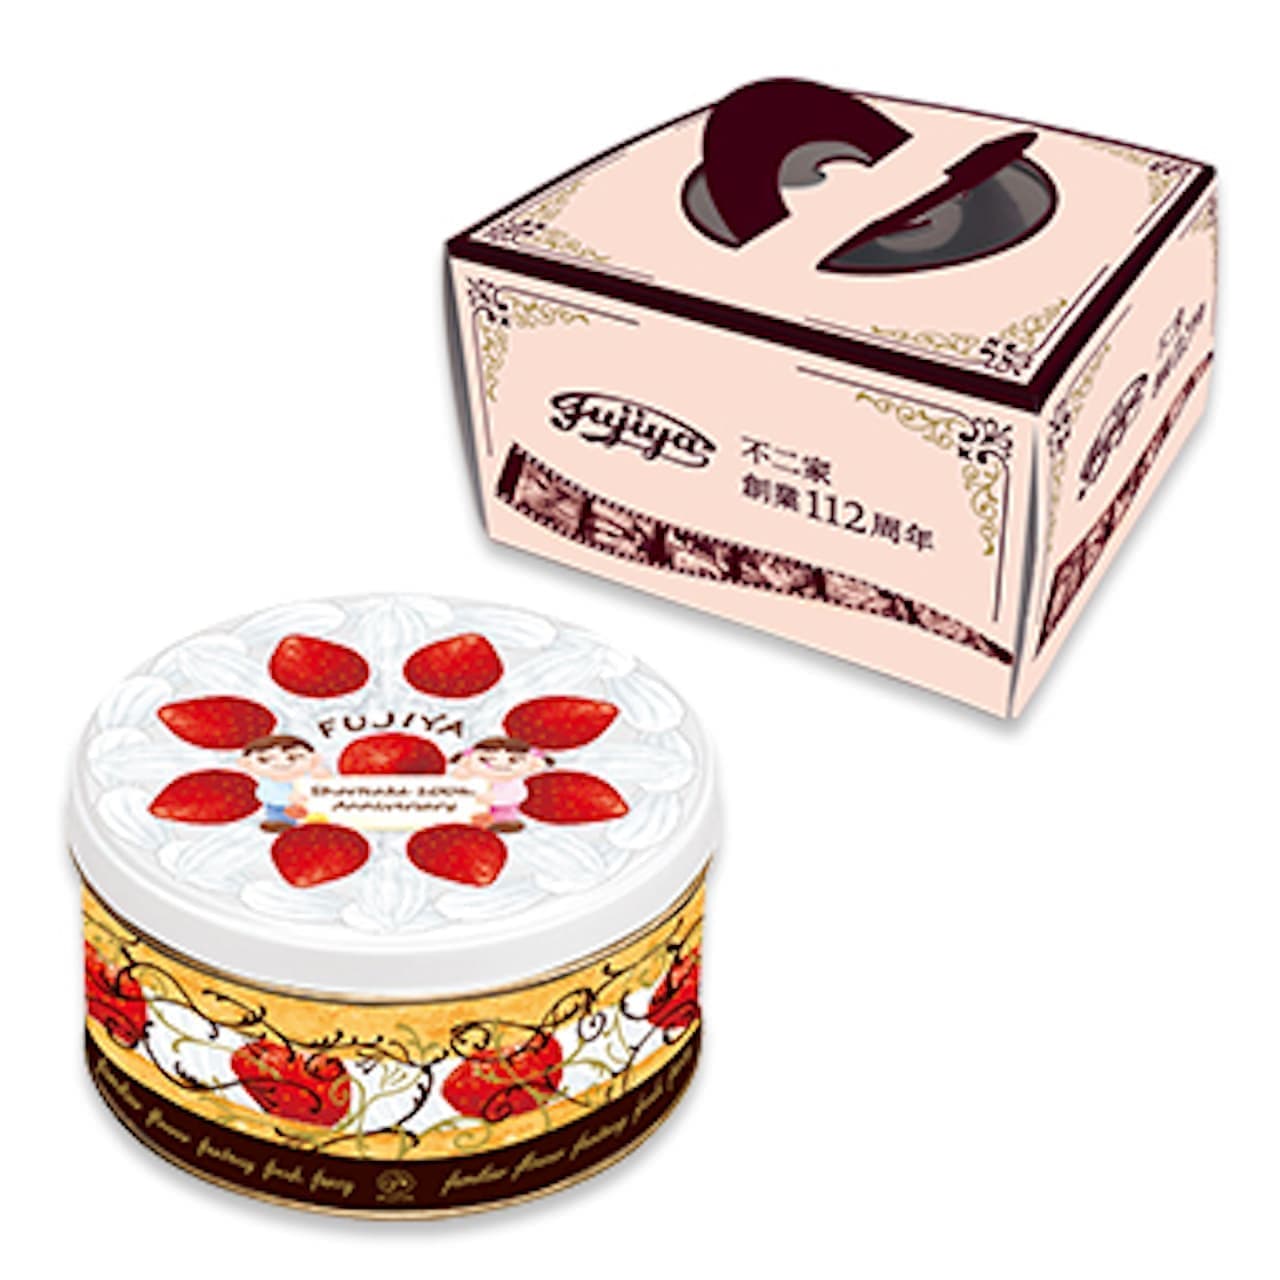 Fujiya "Milky can (original shortcake design)